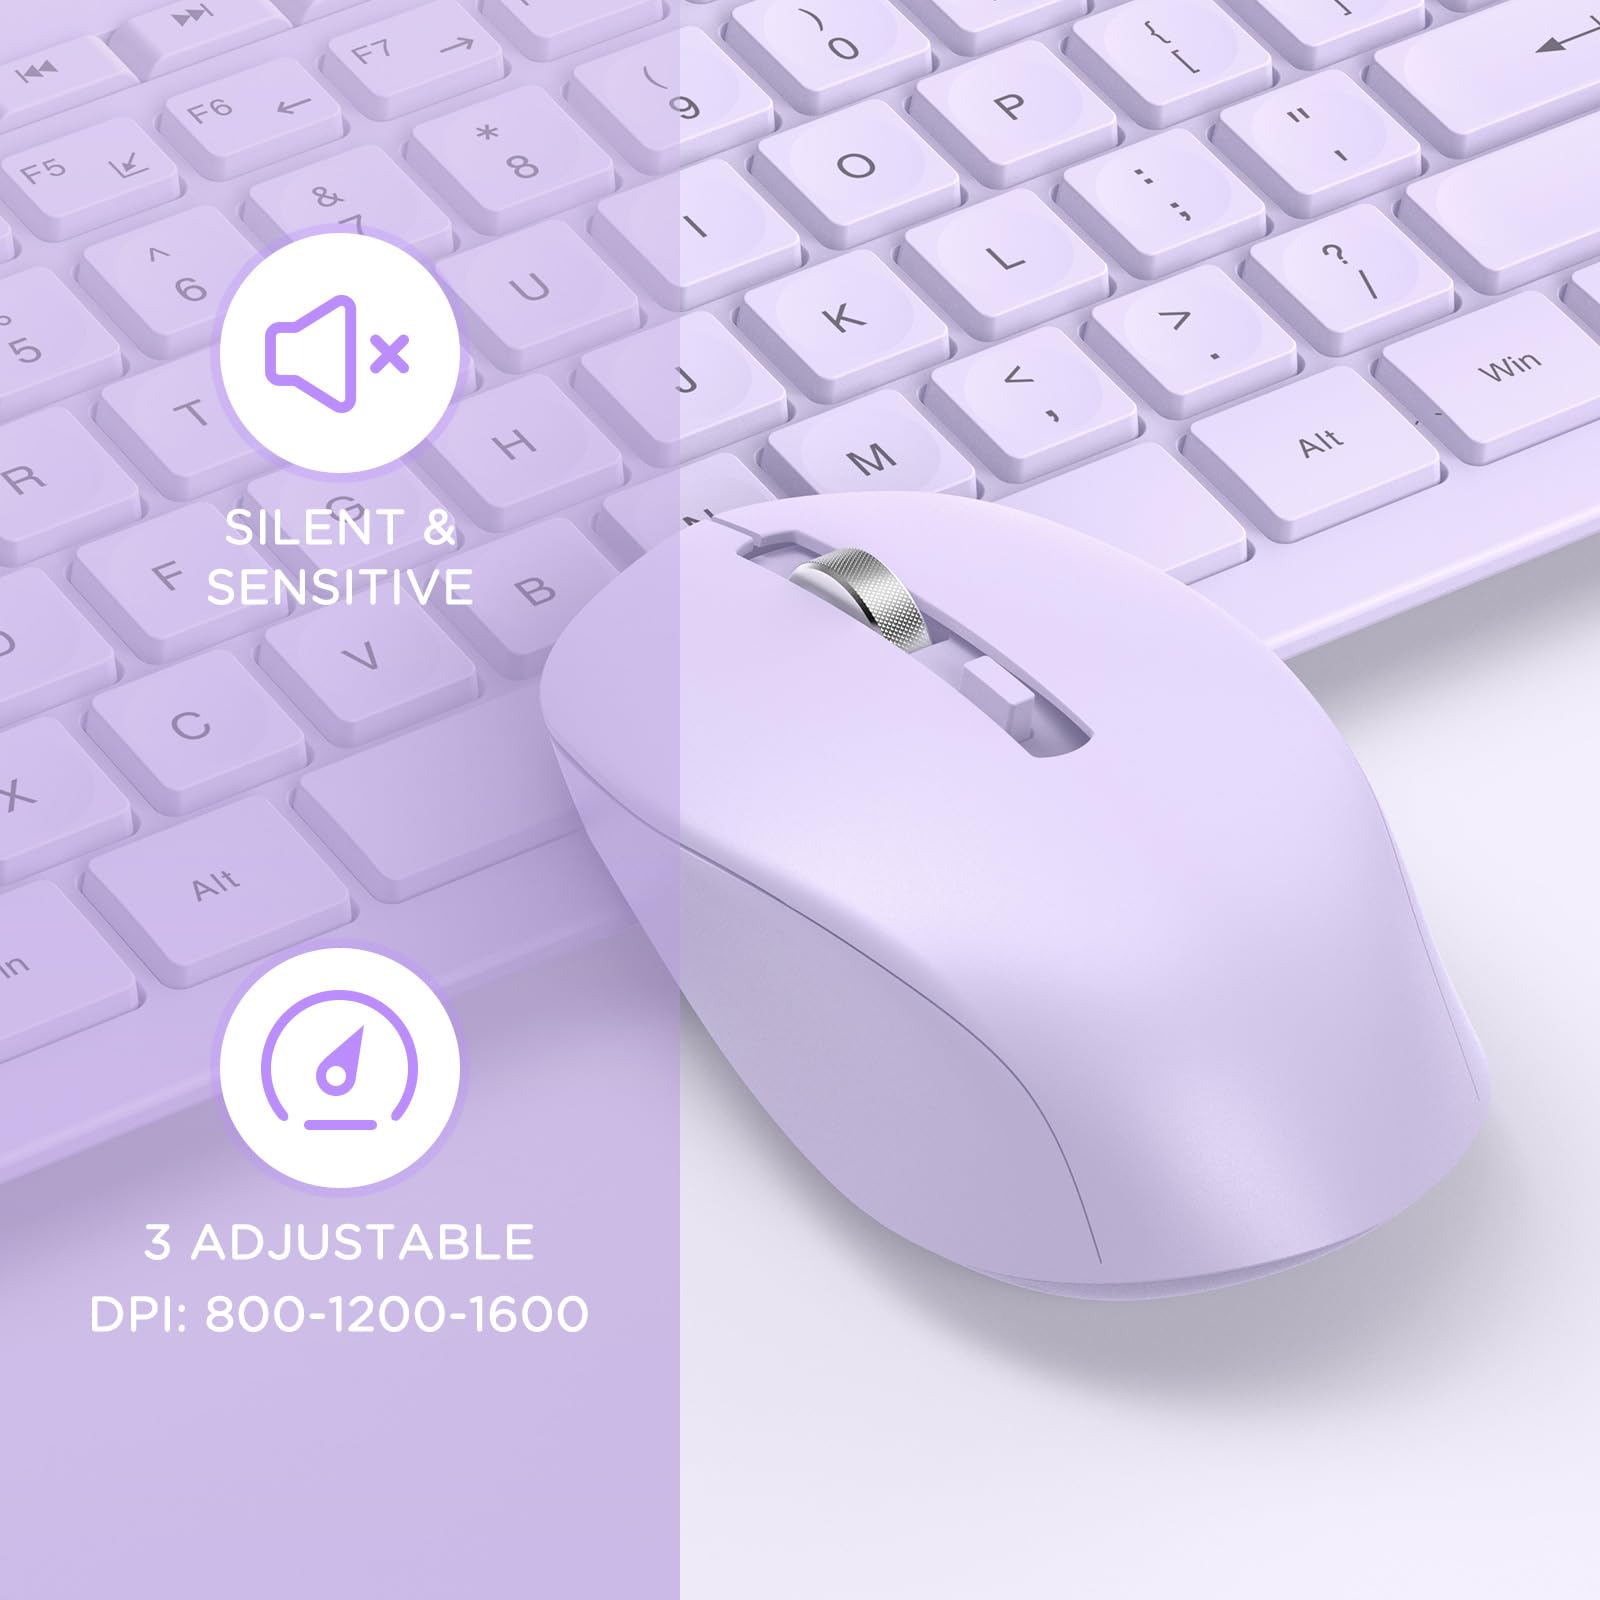 Seenda Wireless Keyboard and Mouse Combo, Full Size 2.4GHz Wireless Quiet Keyboard Mouse with USB Receiver, Cute Ergonomic Cordless Keyboard Mouse for Windows Laptop Computer Desktop, Purple